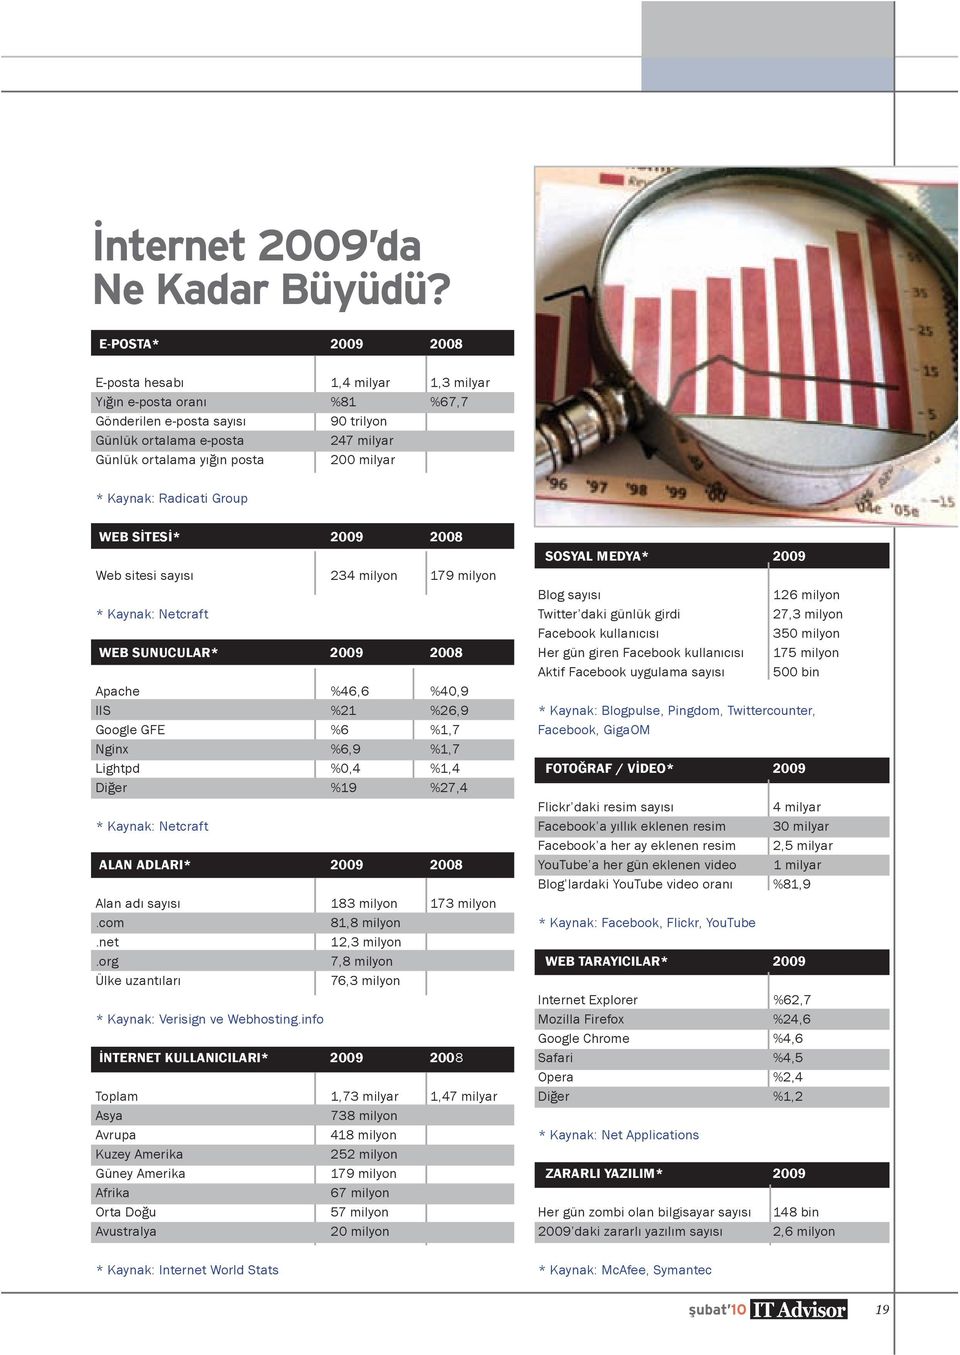 Radicati Group WEB S TES * 2009 2008 Web sitesi say s 234 milyon 179 milyon * Kaynak: Netcraft WEB SUNUCULAR* 2009 2008 Apache %46,6 %40,9 IIS %21 %26,9 Google GFE %6 %1,7 Nginx %6,9 %1,7 Lightpd